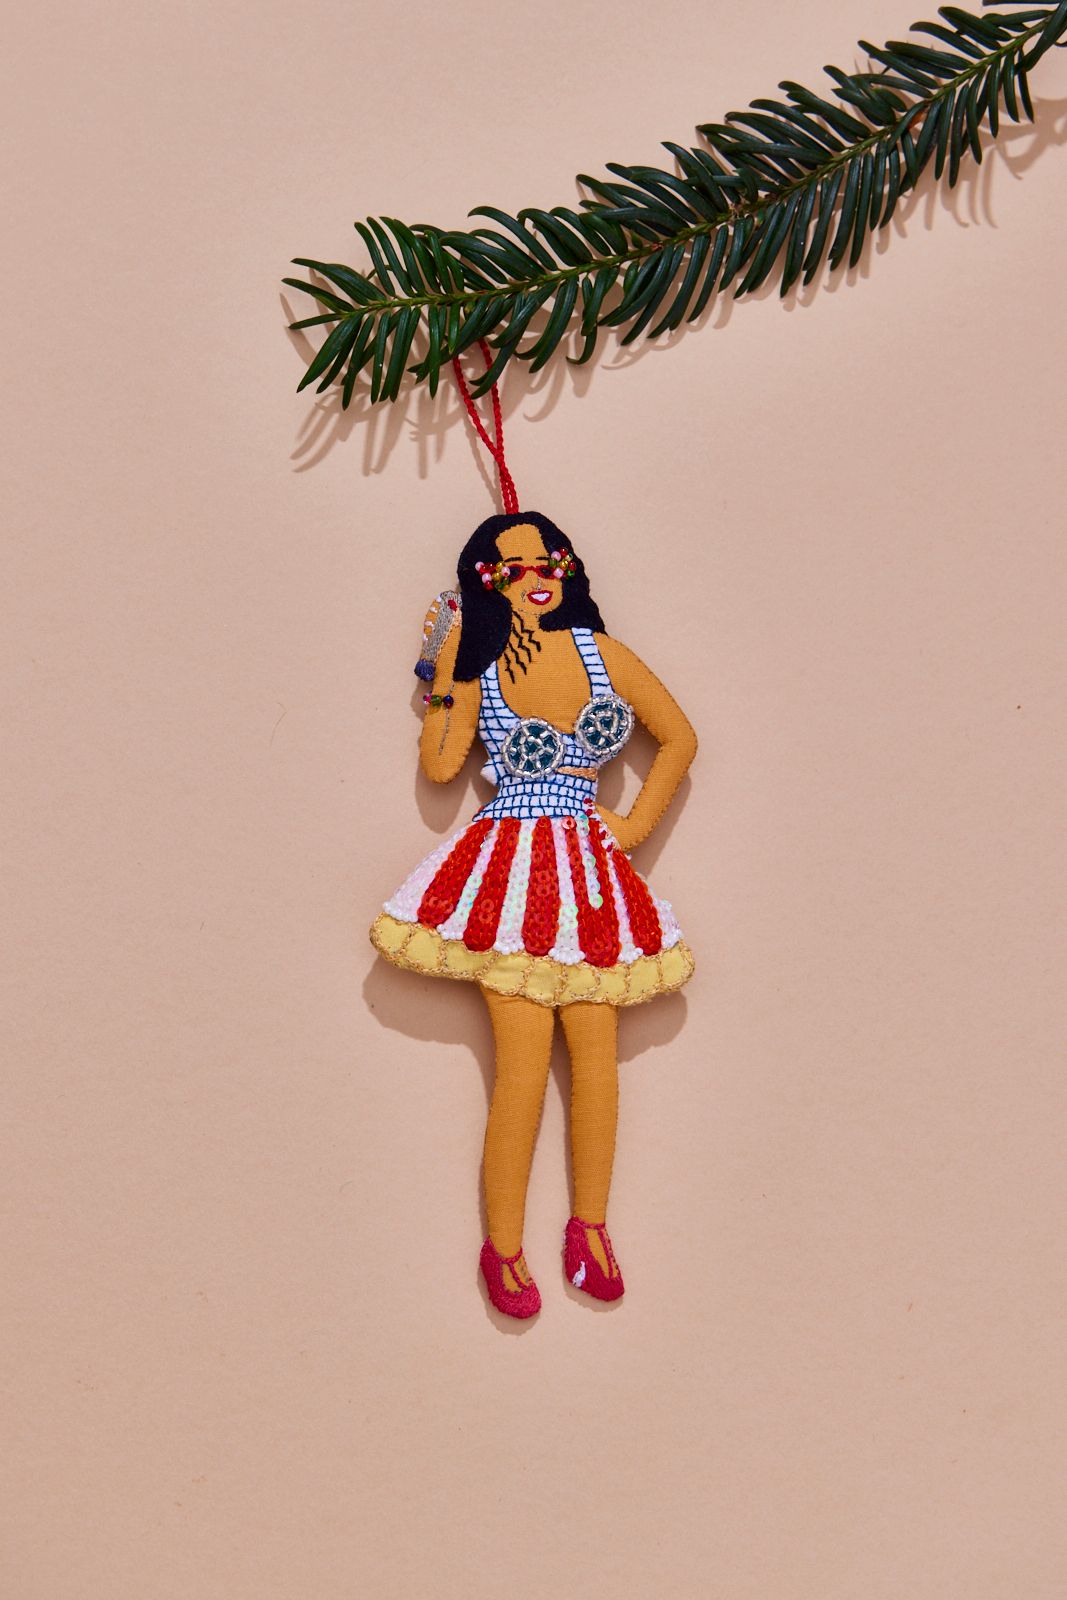 Katy Perry decoration